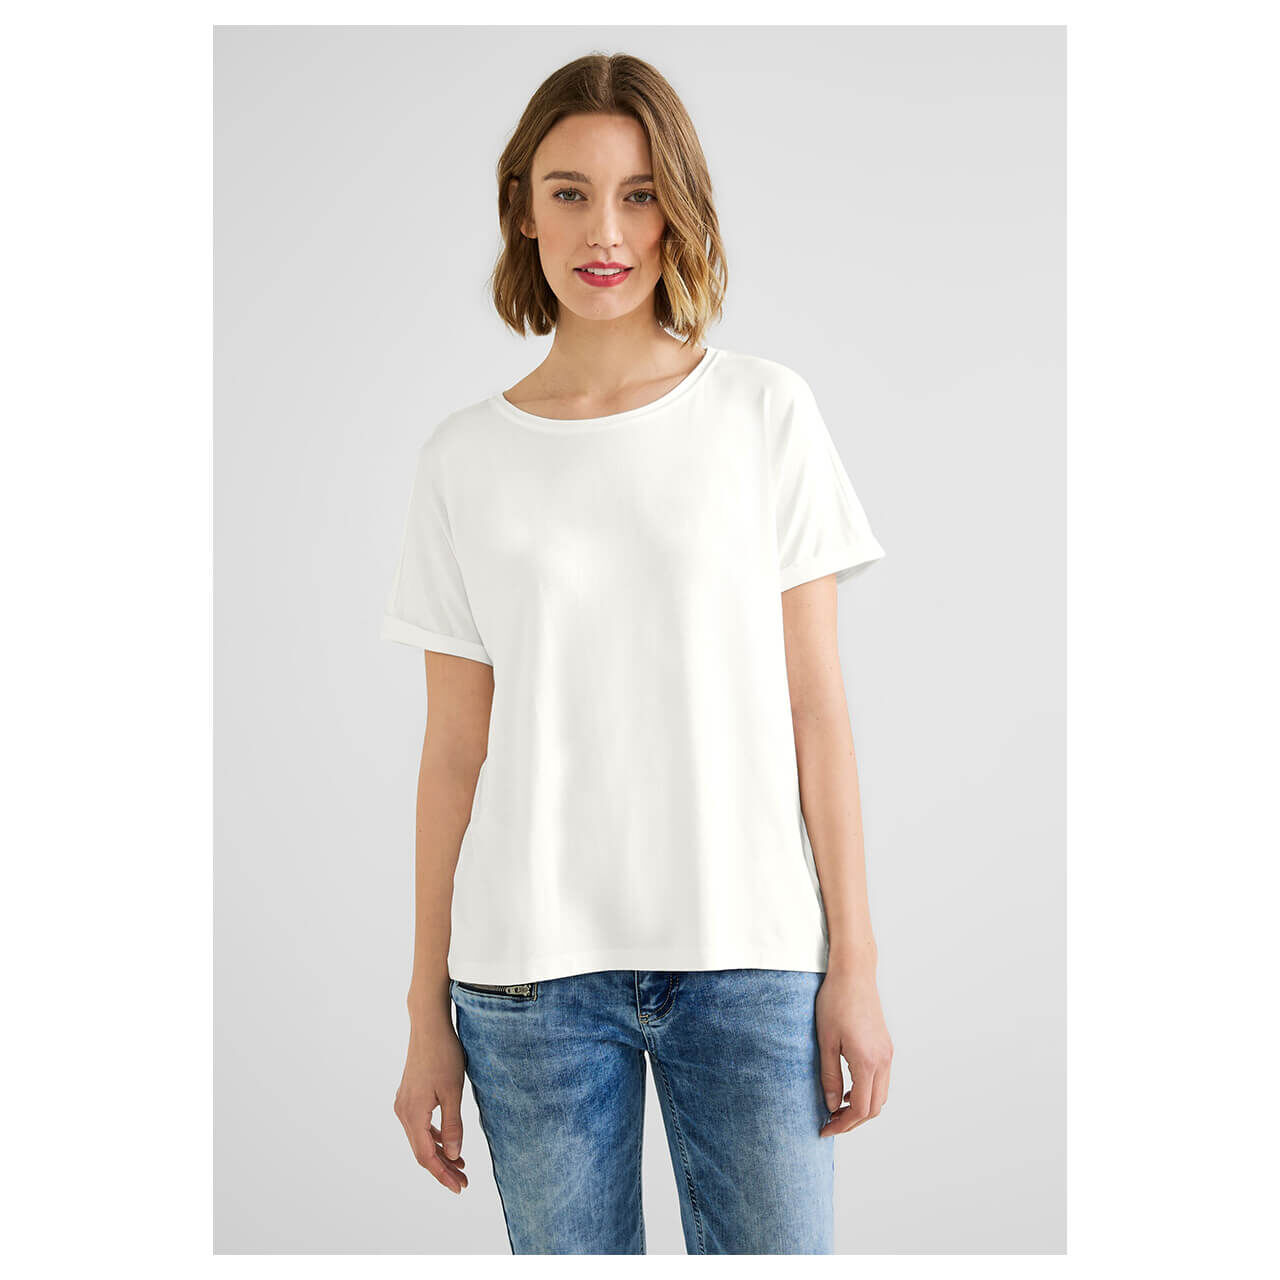 Street One Crista T-Shirt off white